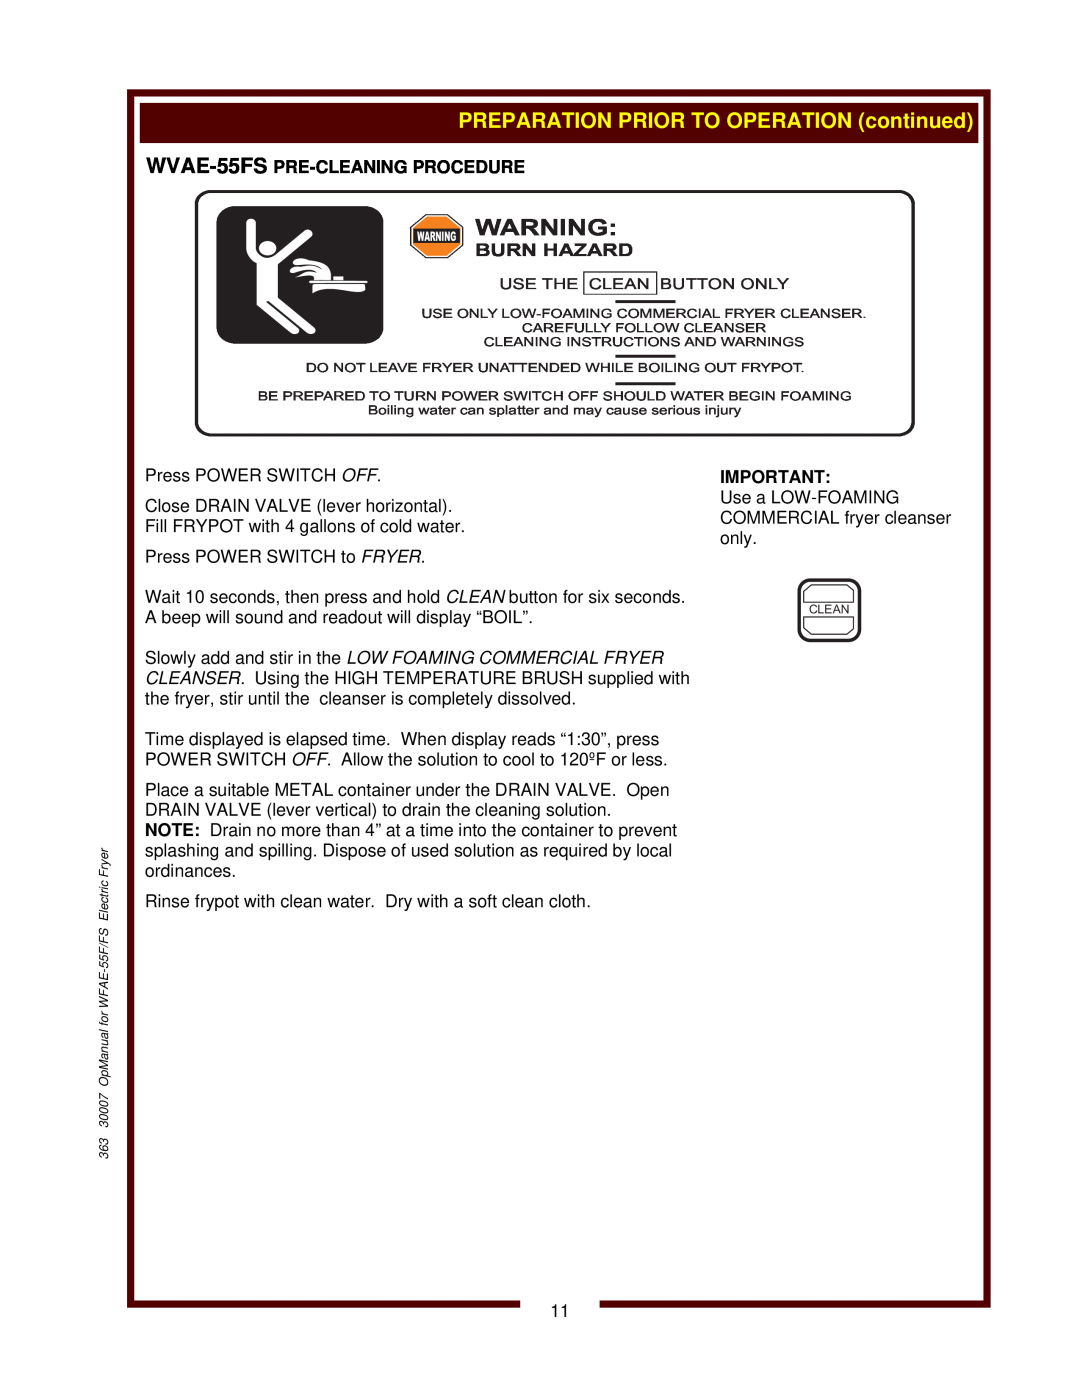 Bloomfield WFAE-55FS operation manual Warning Warning, WVAE-55FS PRE-CLEANING PROCEDURE, Burn Hazard 